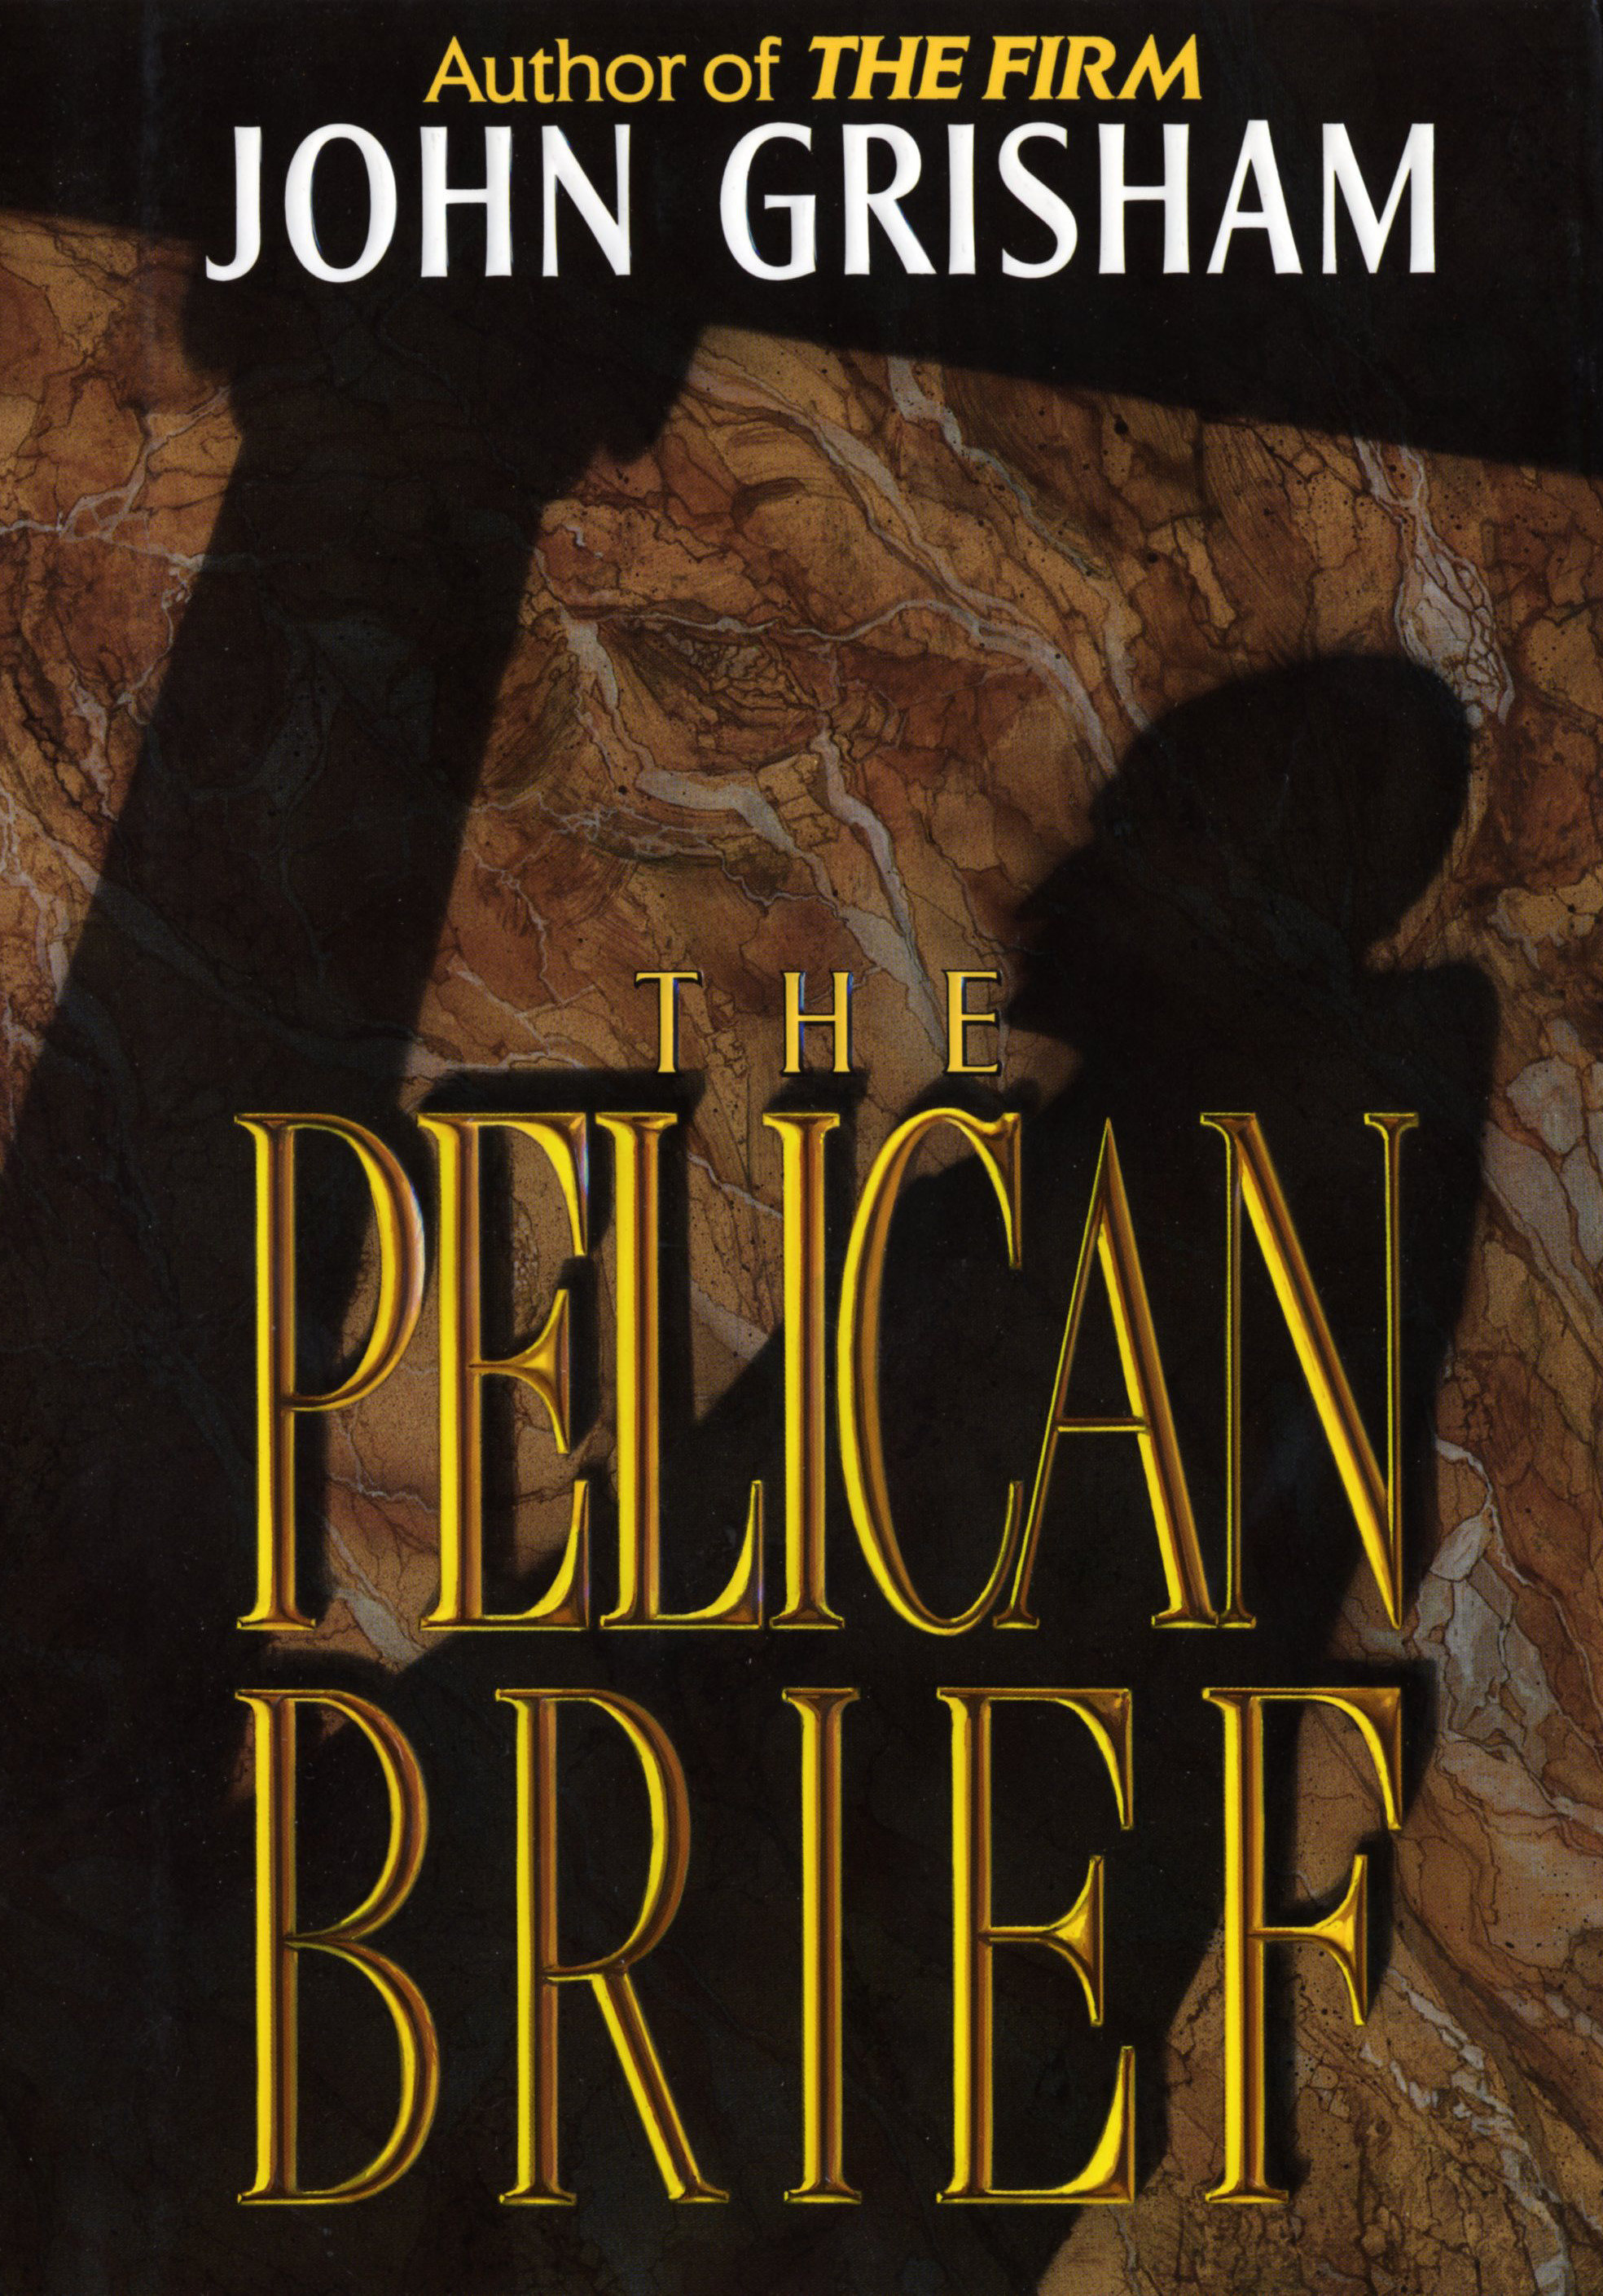 The Pelican Brief (Hardcover Book)